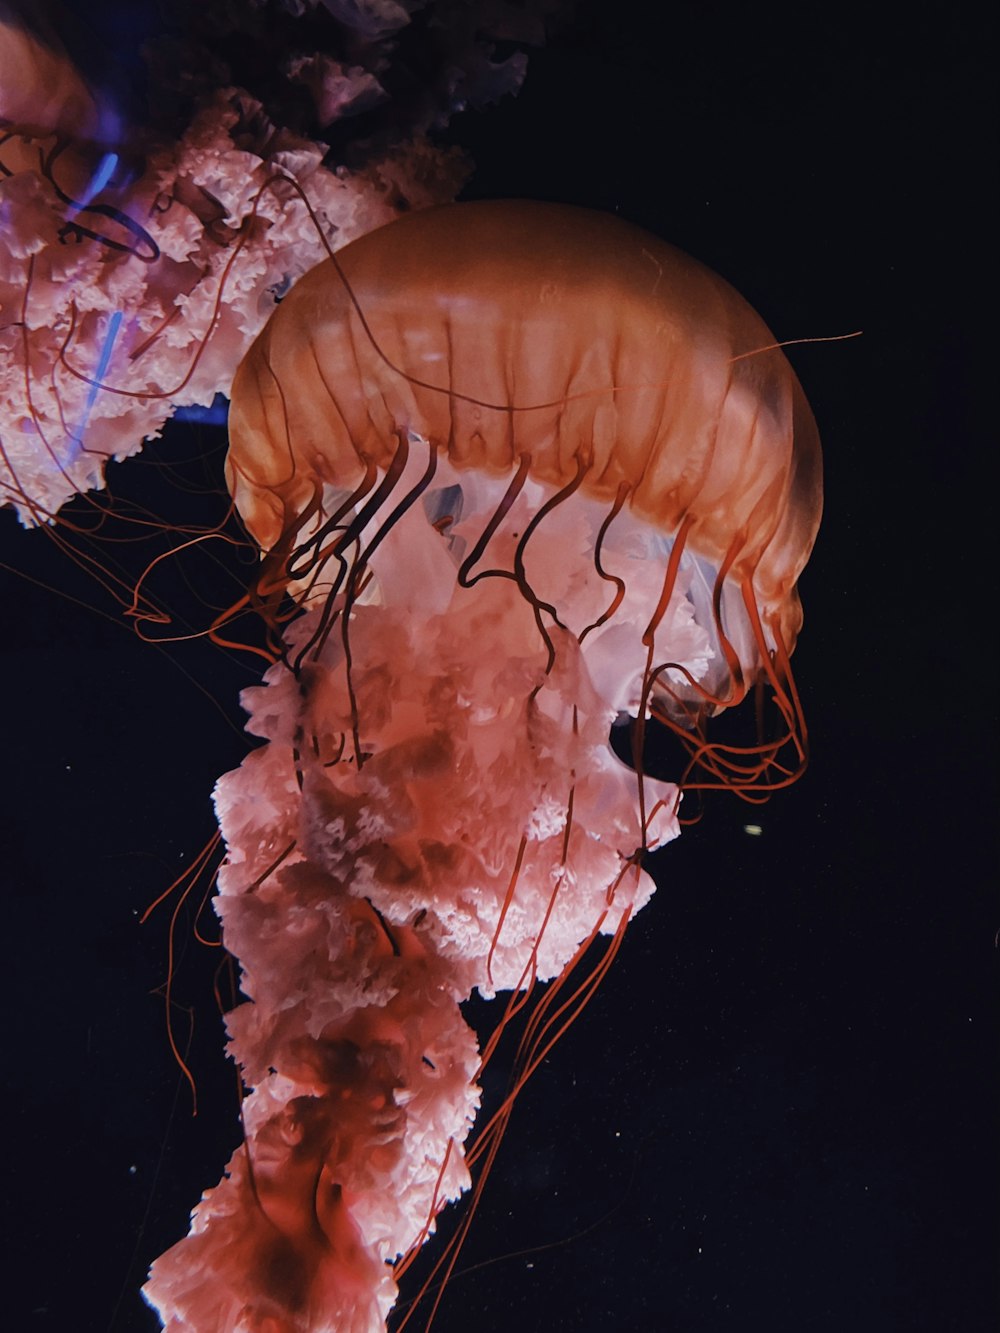 brown jellyfish in water during daytime